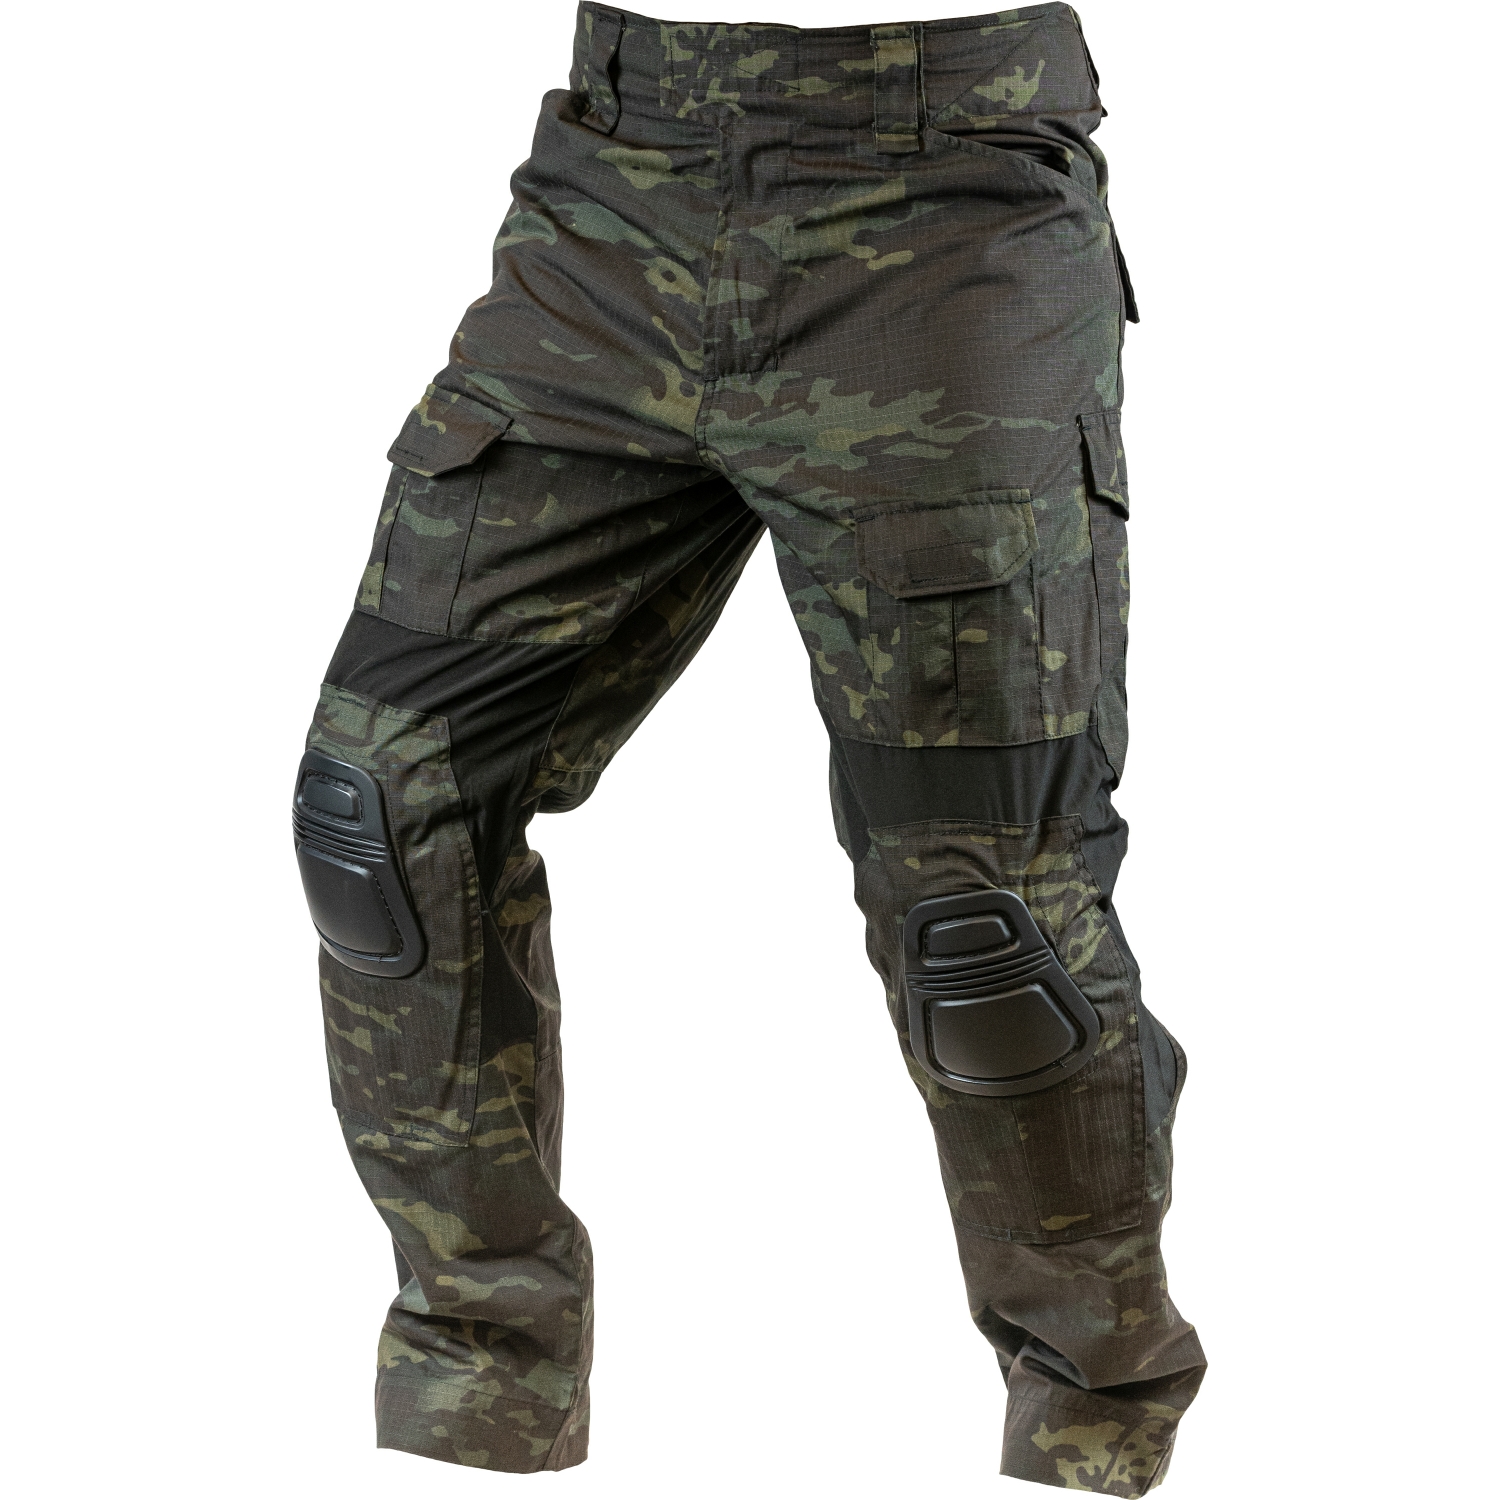 Viper Tactical Gen2 Elite Trousers Combat Airsoft Military Camo Pants Knee Pads Ebay 